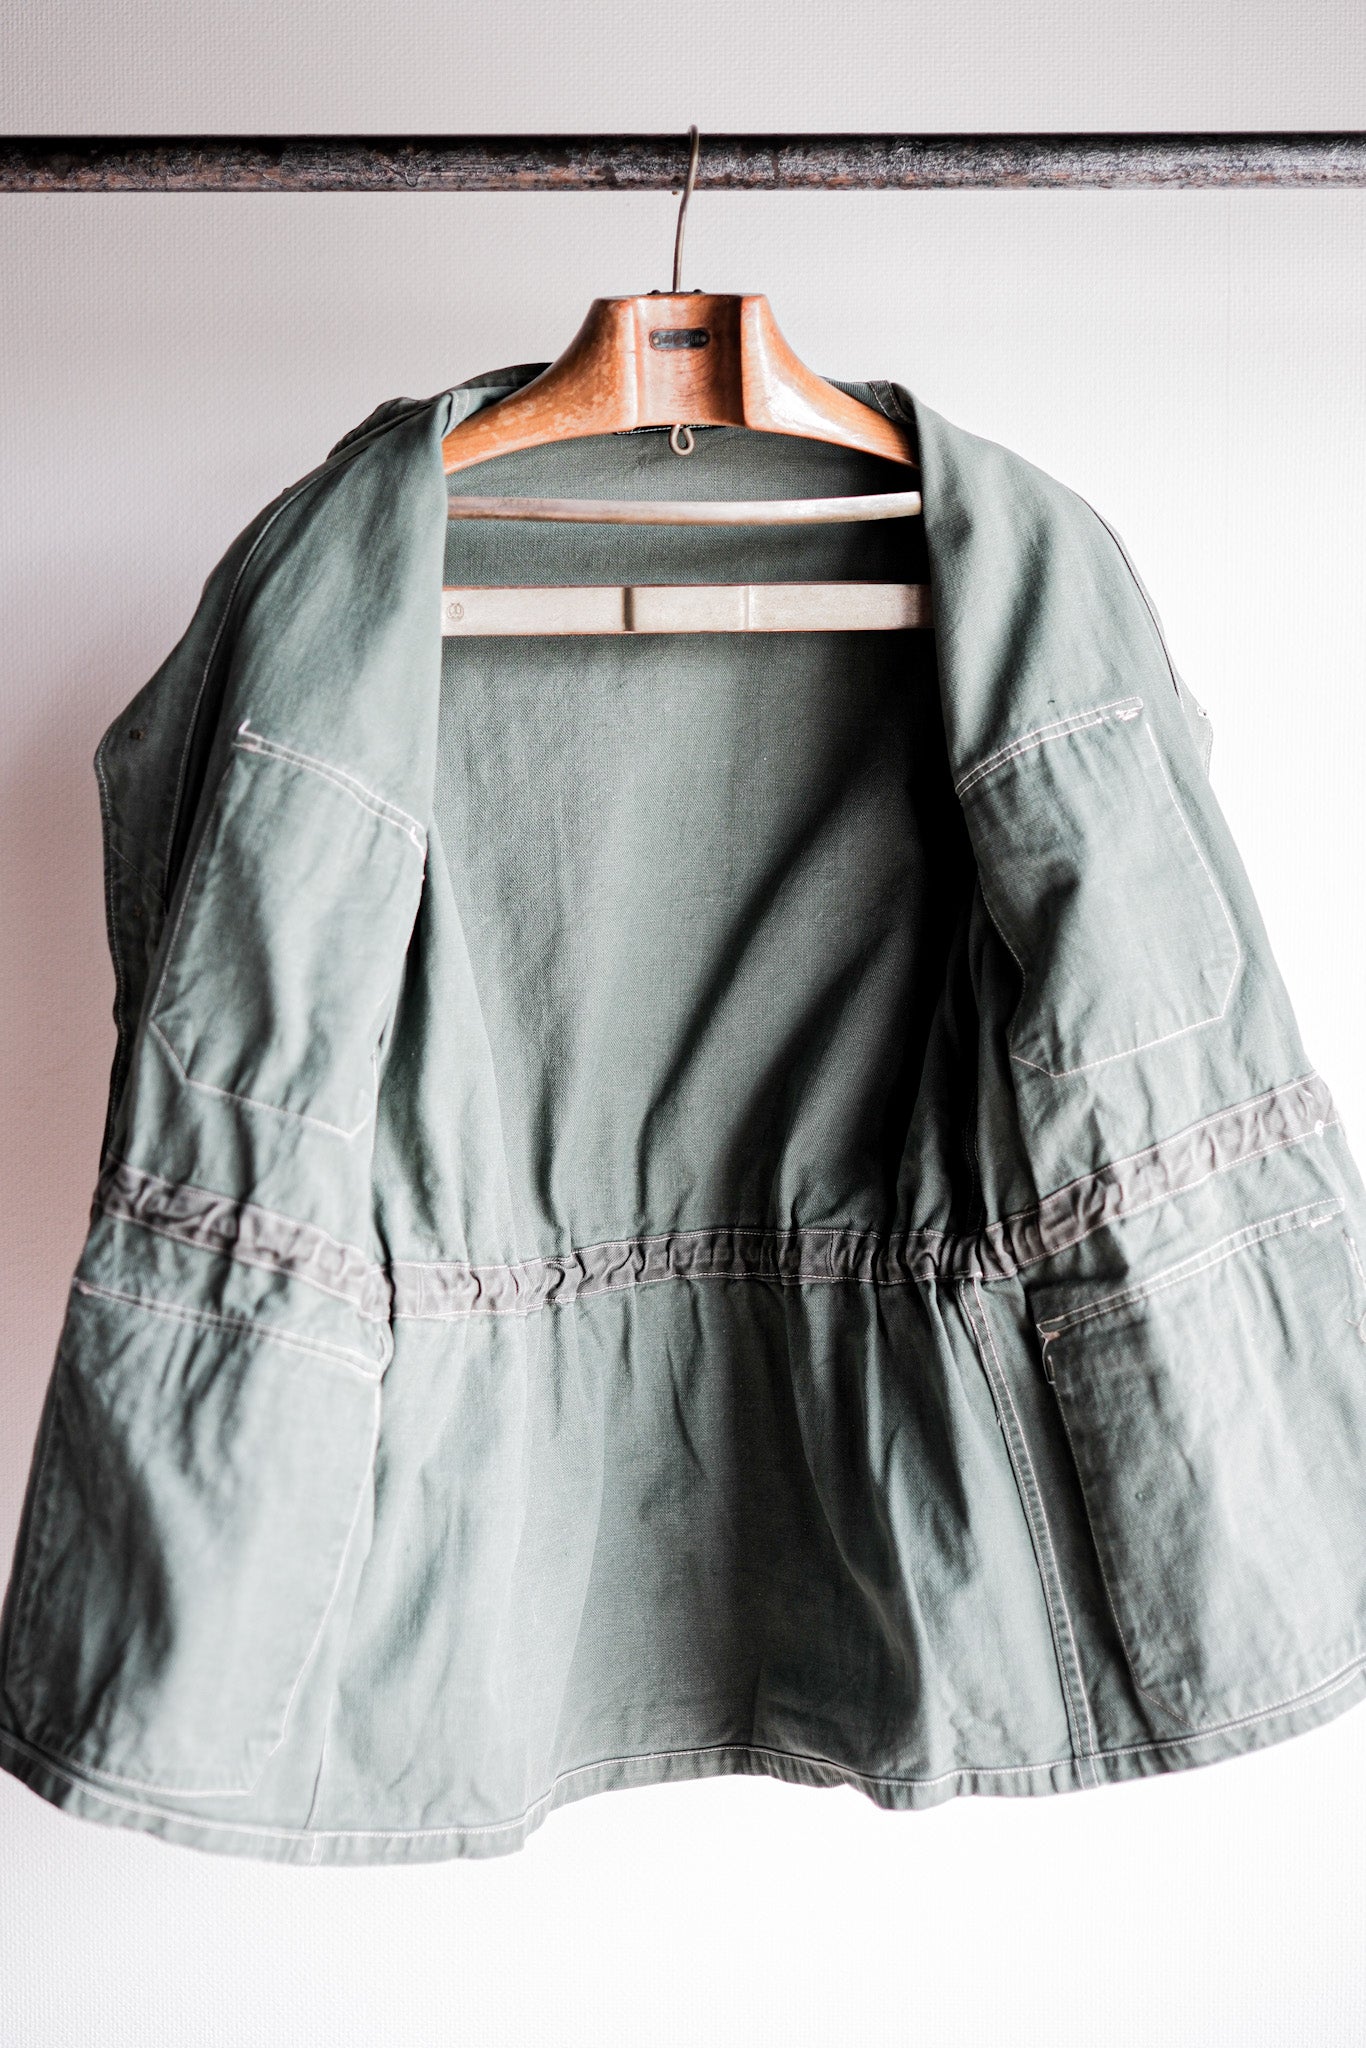 [~ 50's] ผ้าฝ้ายสีเขียววินเทจฝรั่งเศส Twill 4 กระเป๋าทำงานแจ็คเก็ต "รูปแบบที่ผิดปกติ"